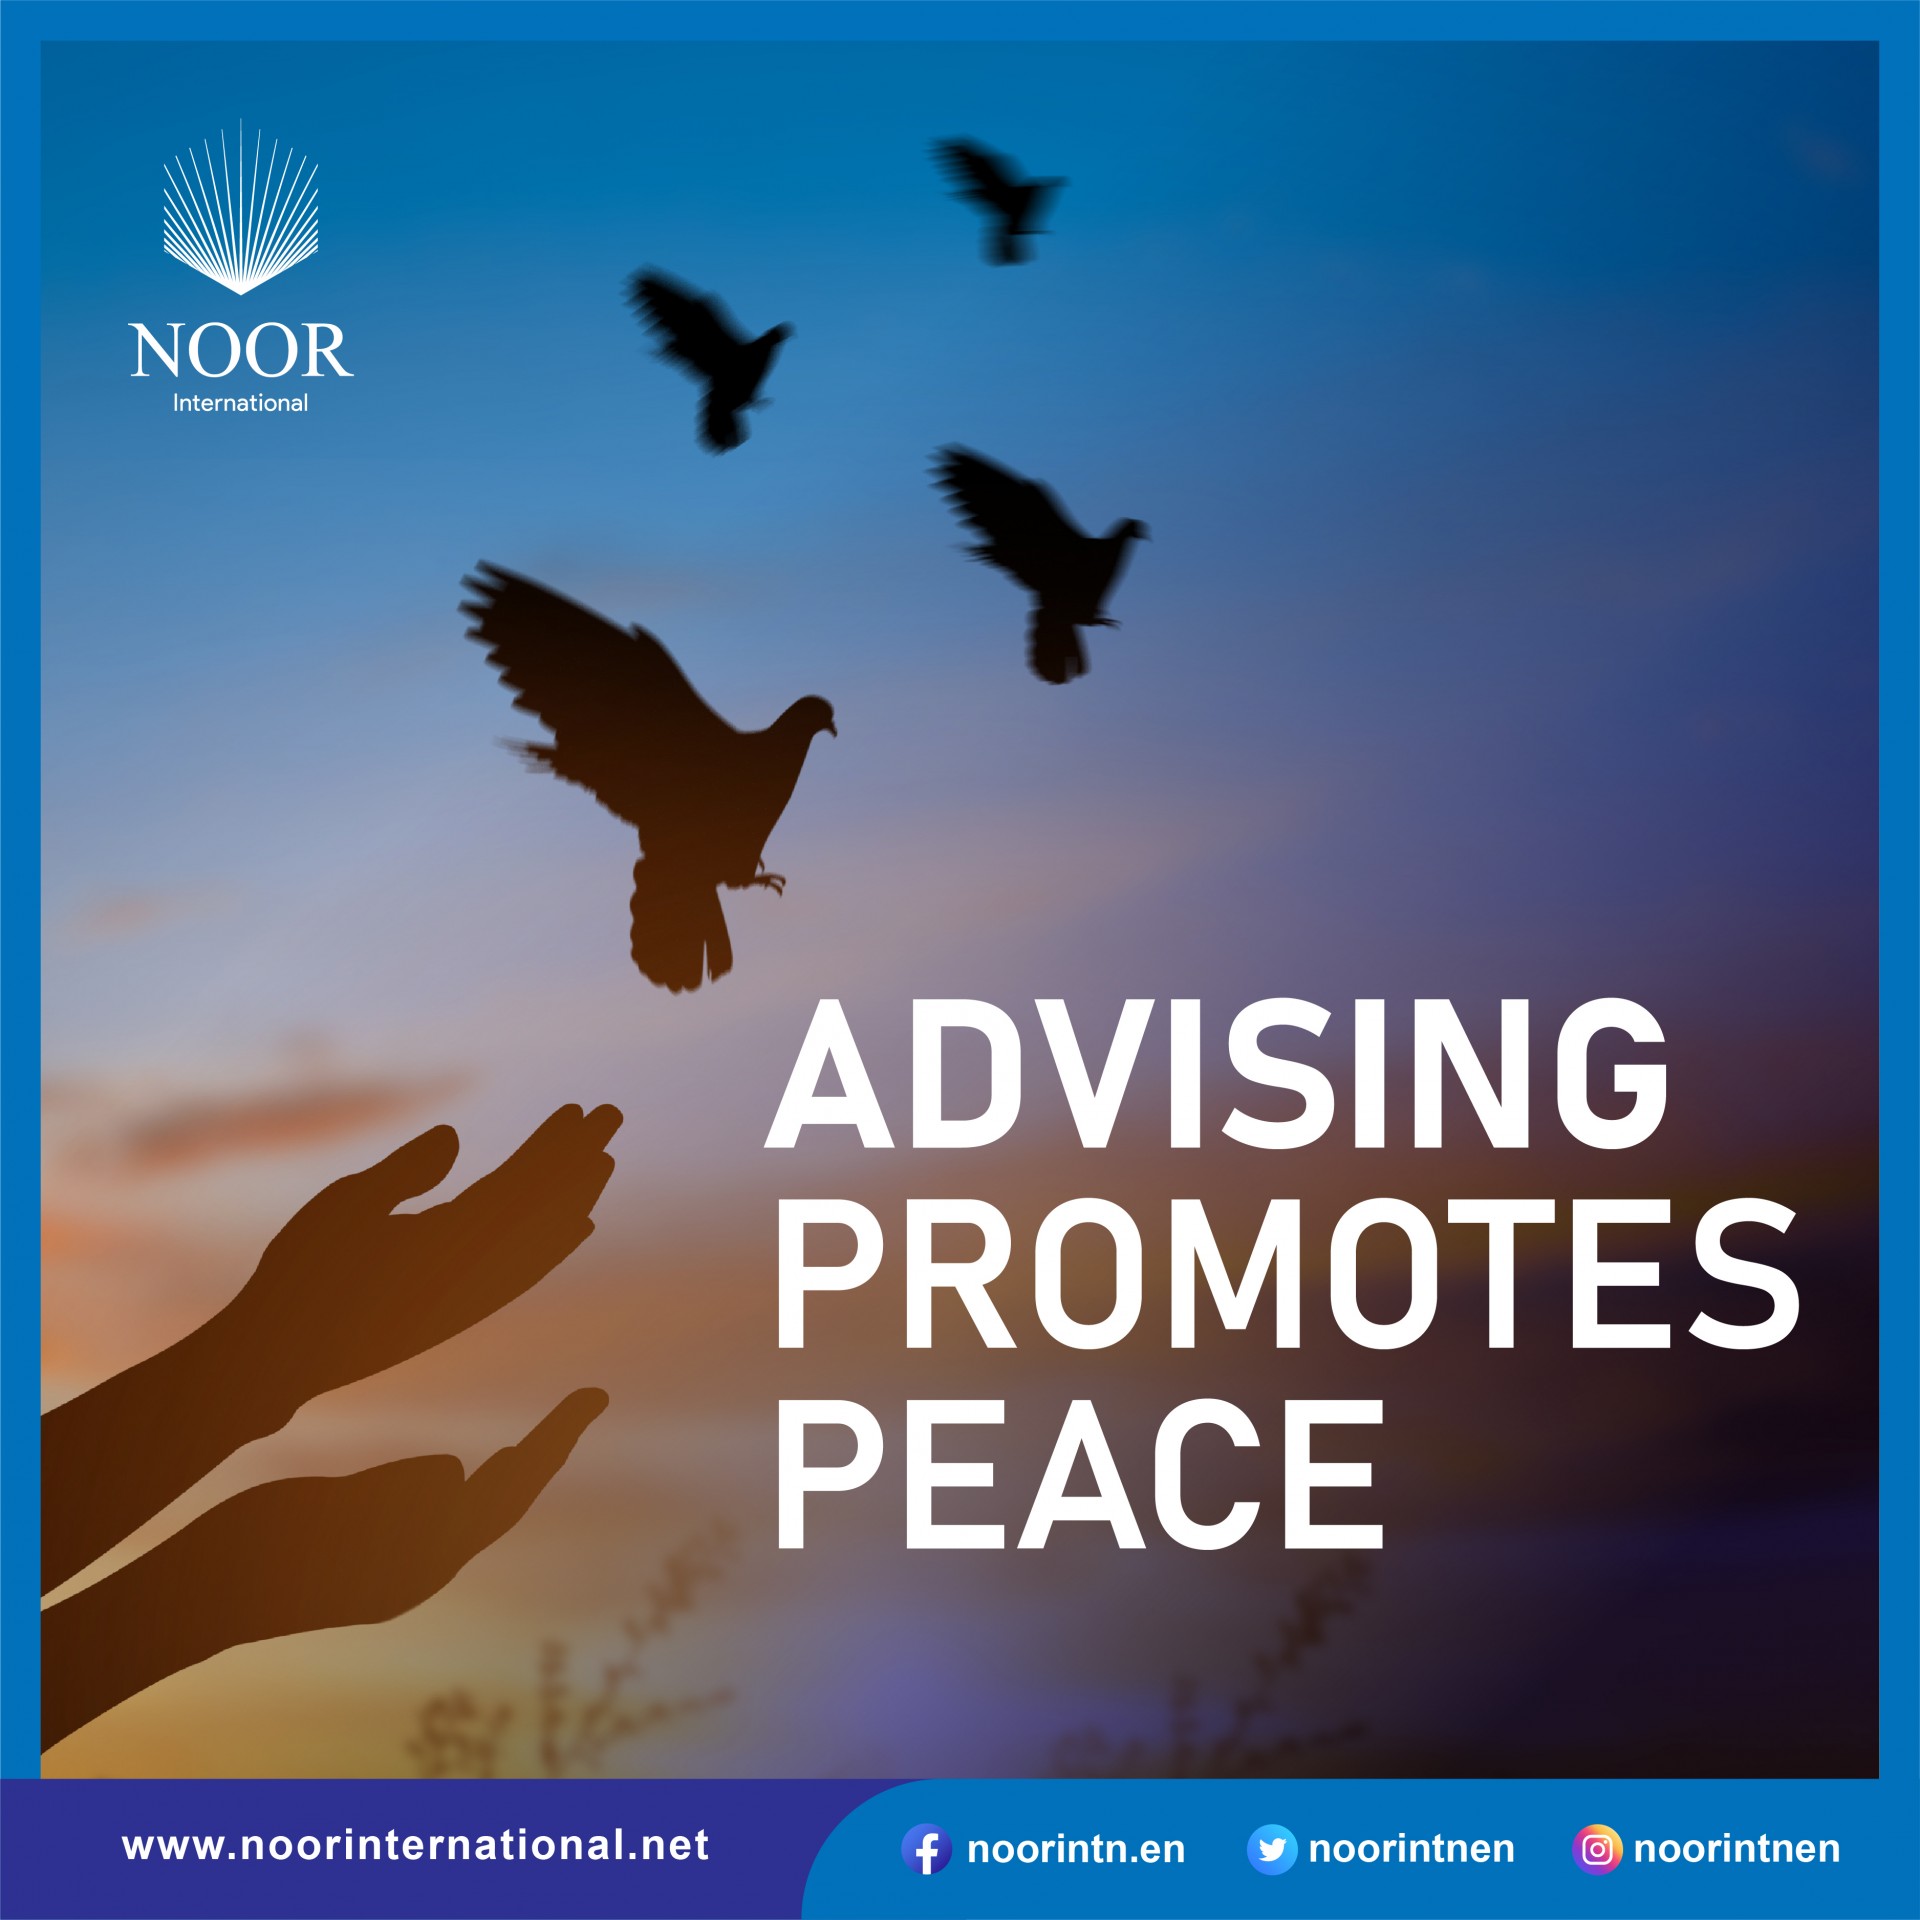 Advising promotes peace